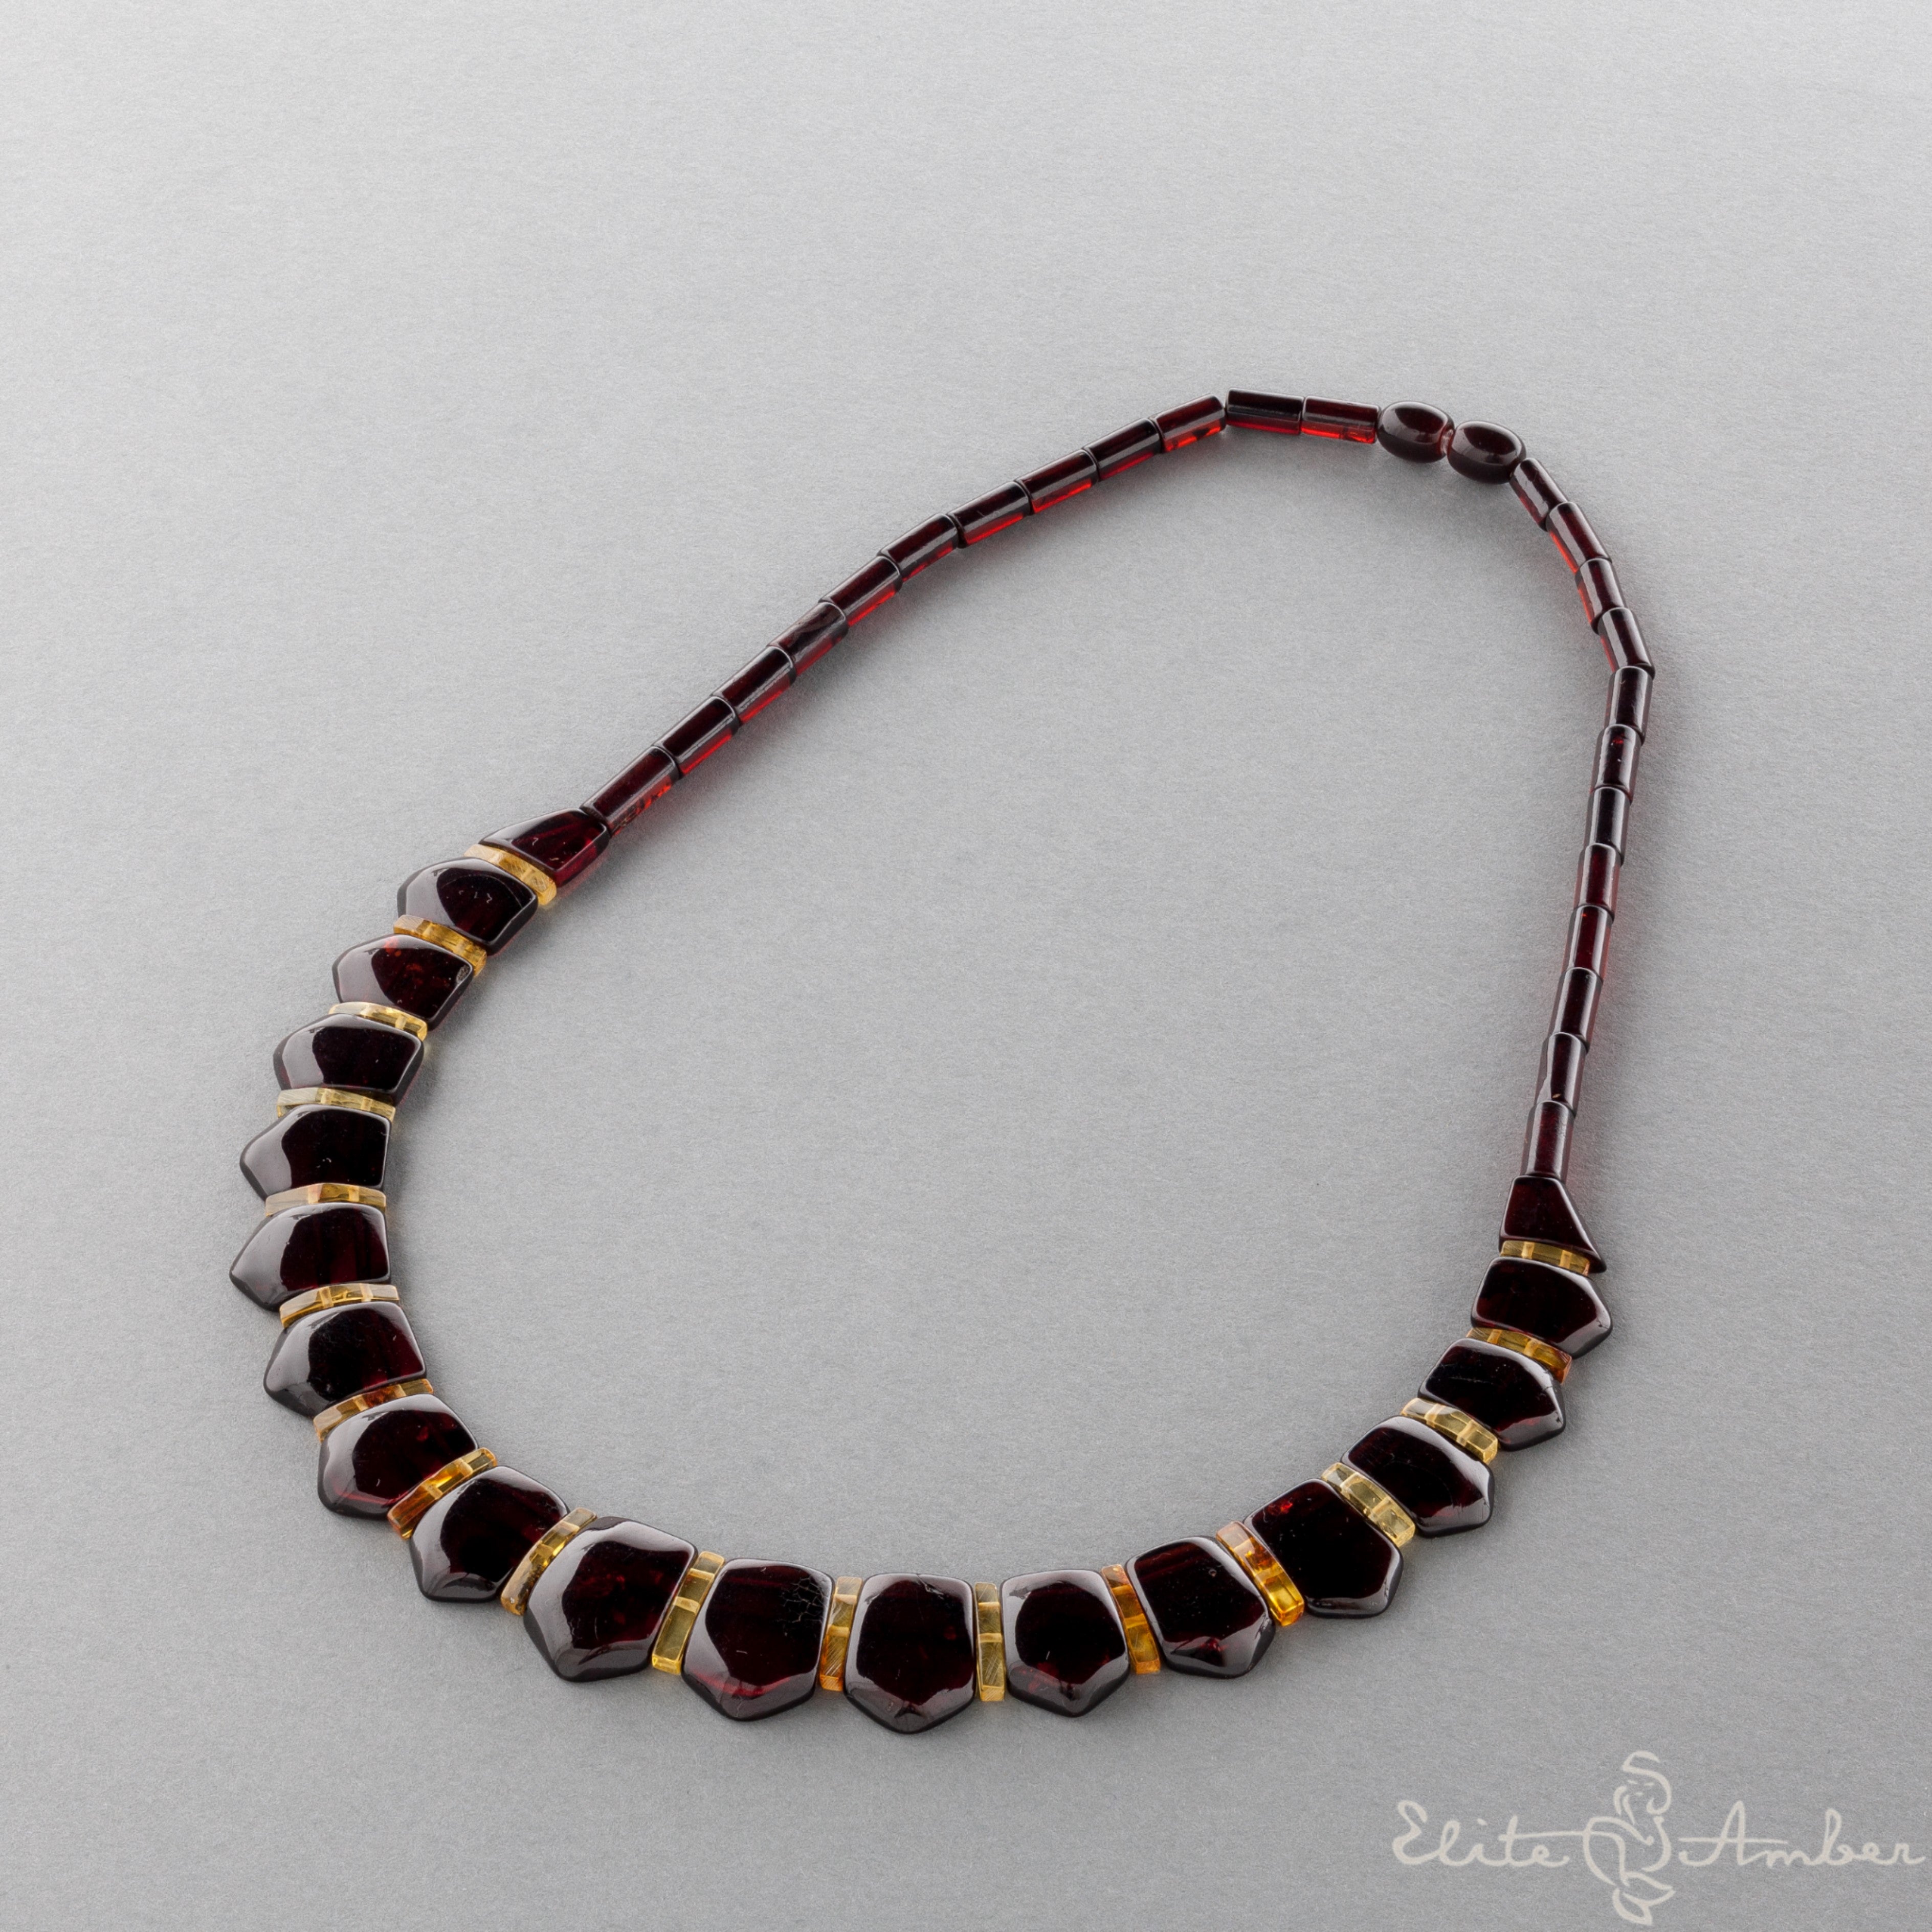 Amber necklace "Cherry pentagon Cleopatra"